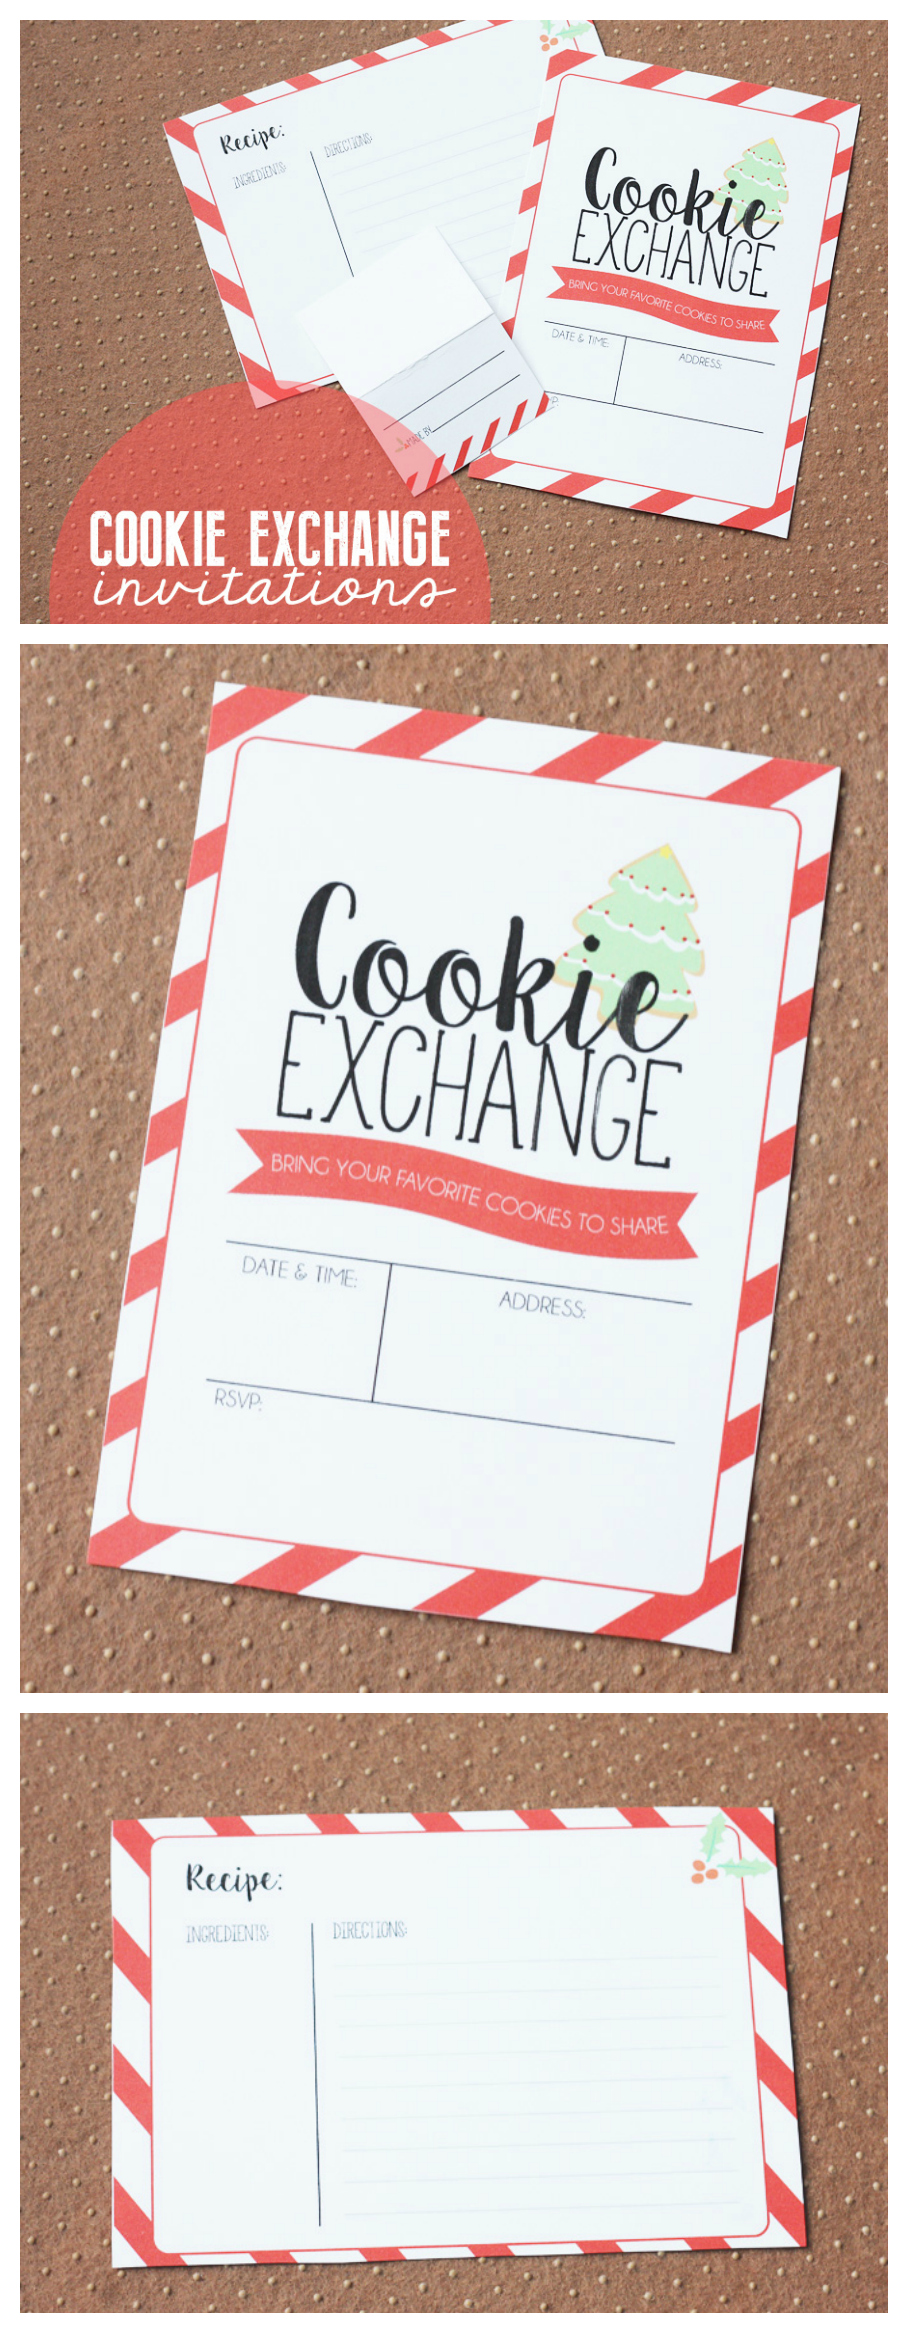 Cookie Exchange Invitation | Cookie Exchange Party Ideas